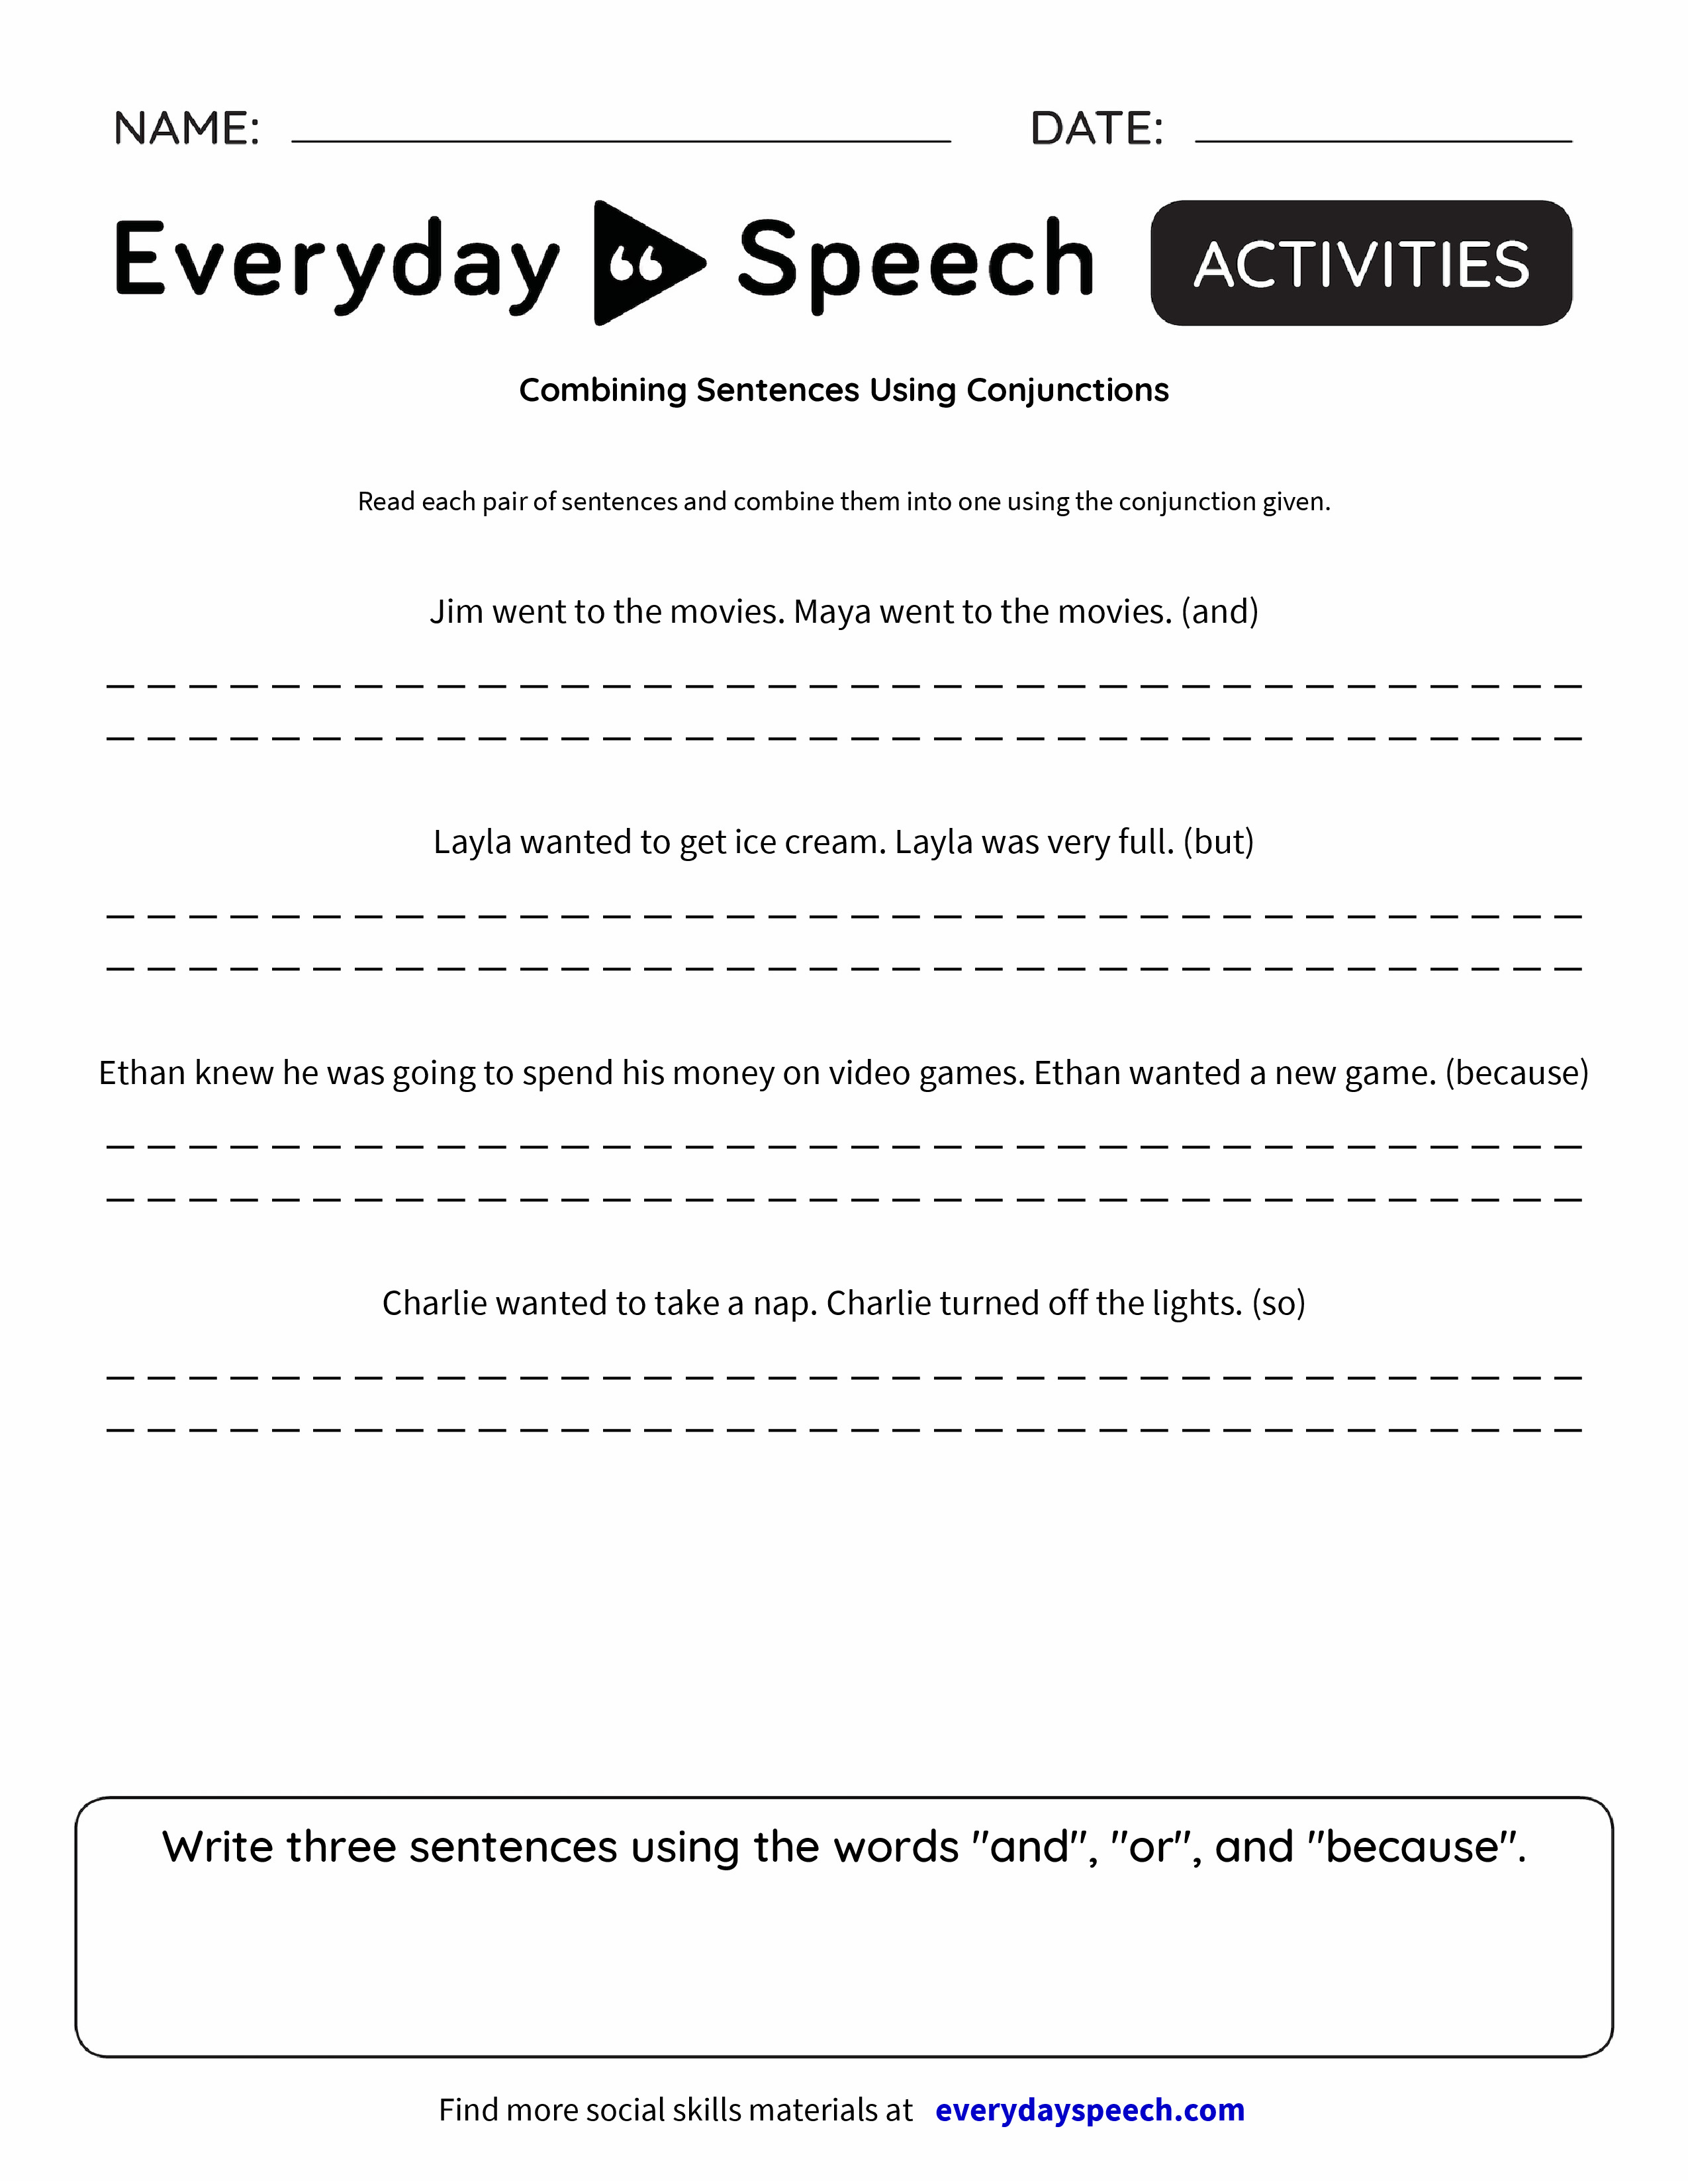 combining-sentences-using-conjunctions-everyday-speech-everyday-speech